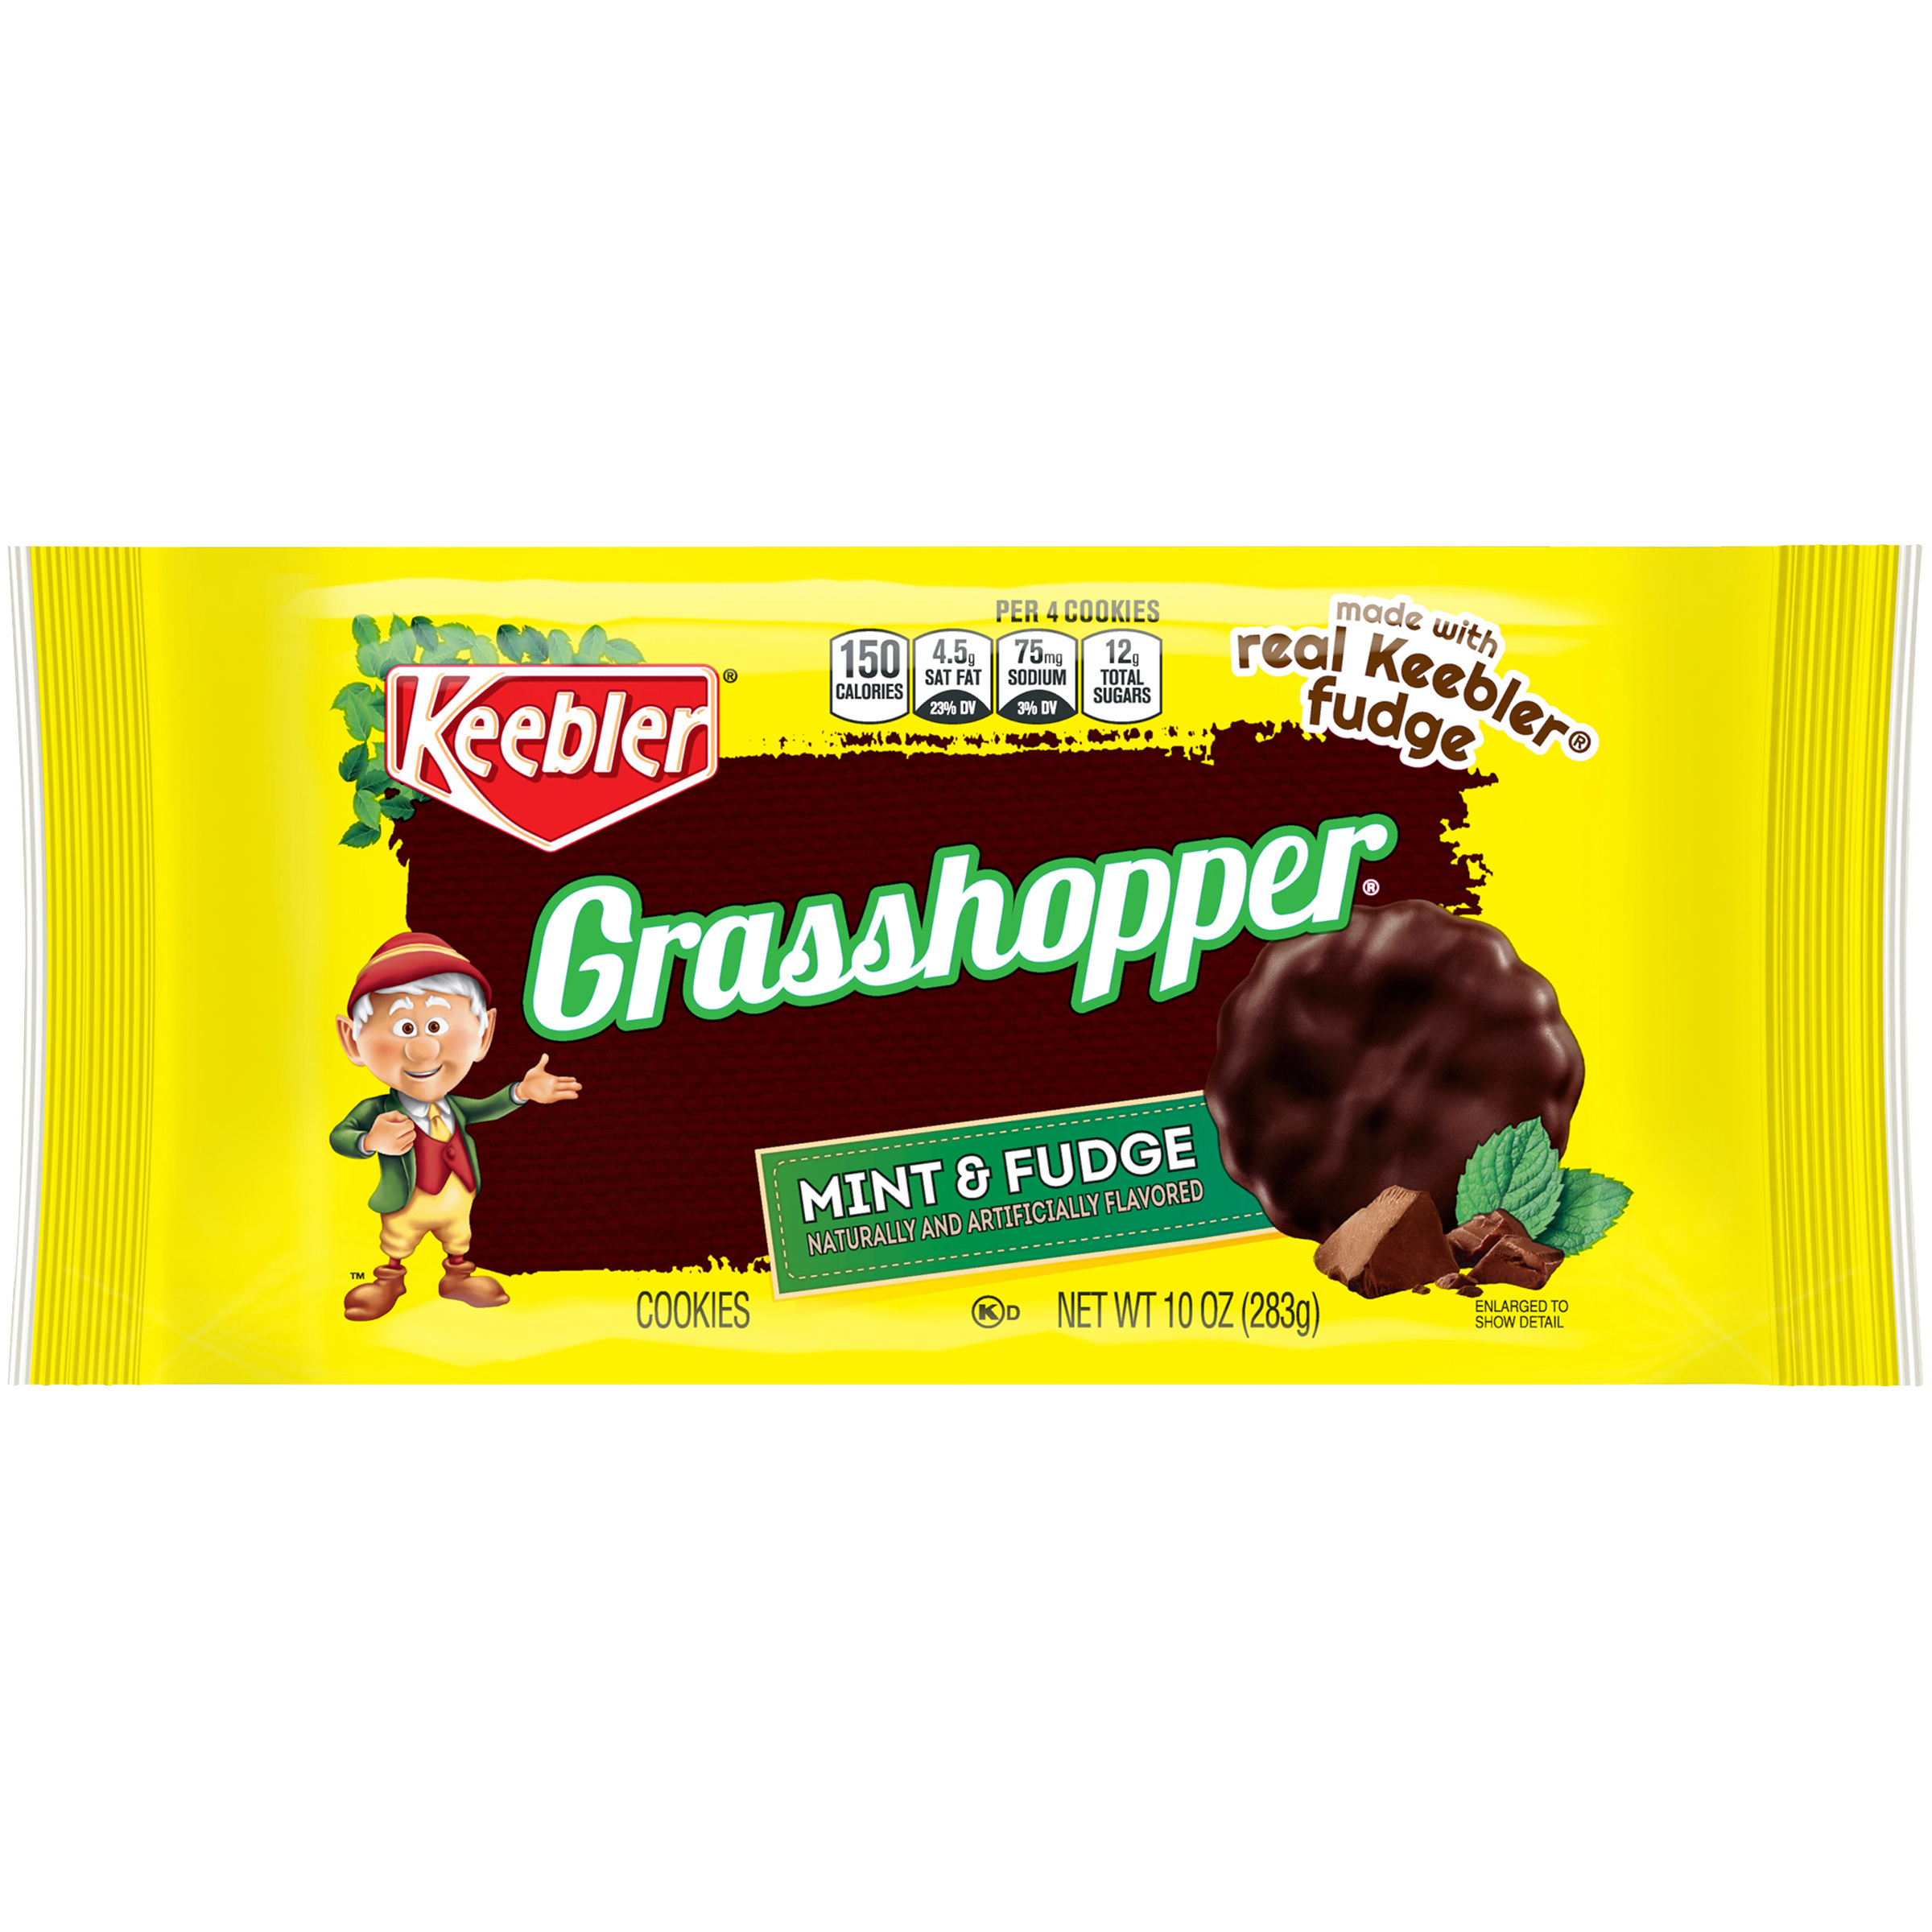 Keebler Grasshopper Mint & Fudge Cookies 10 oz - image 2 of 6